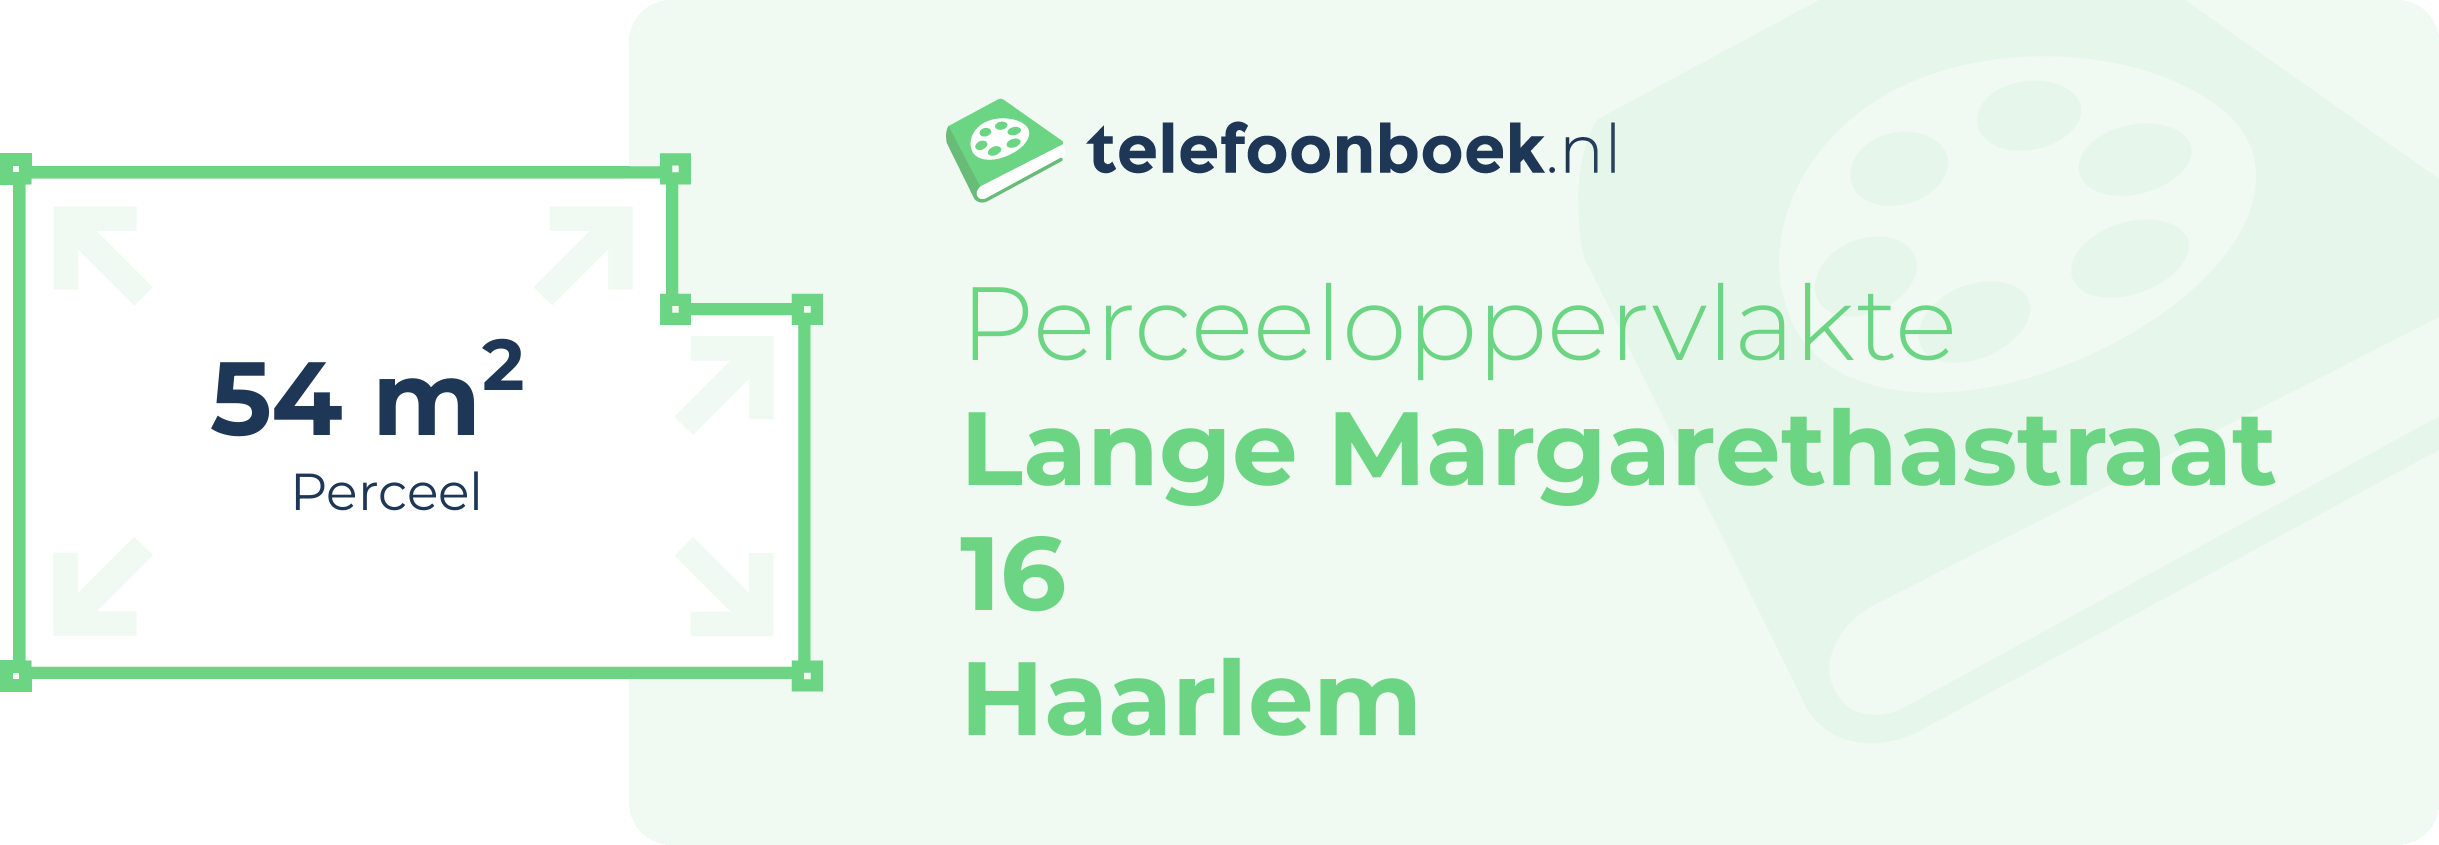 Perceeloppervlakte Lange Margarethastraat 16 Haarlem